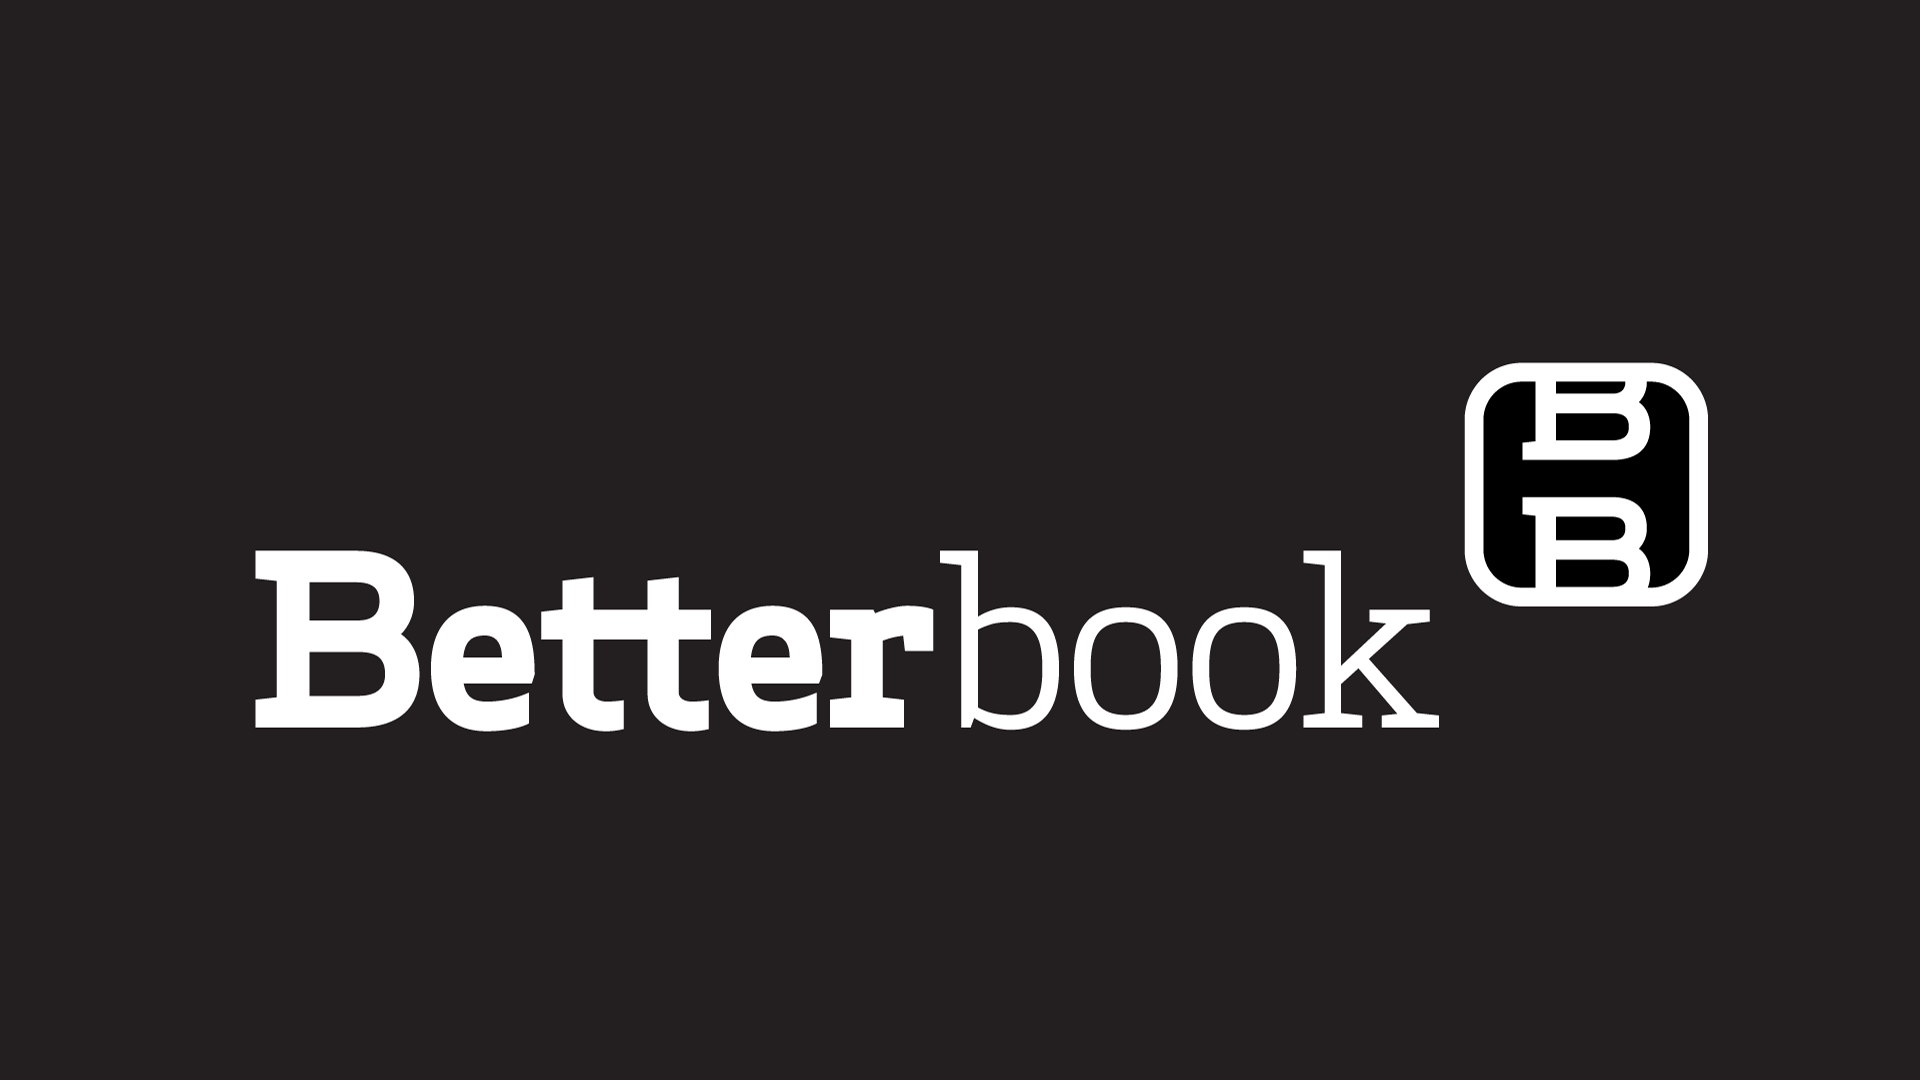 The Betterbook logo